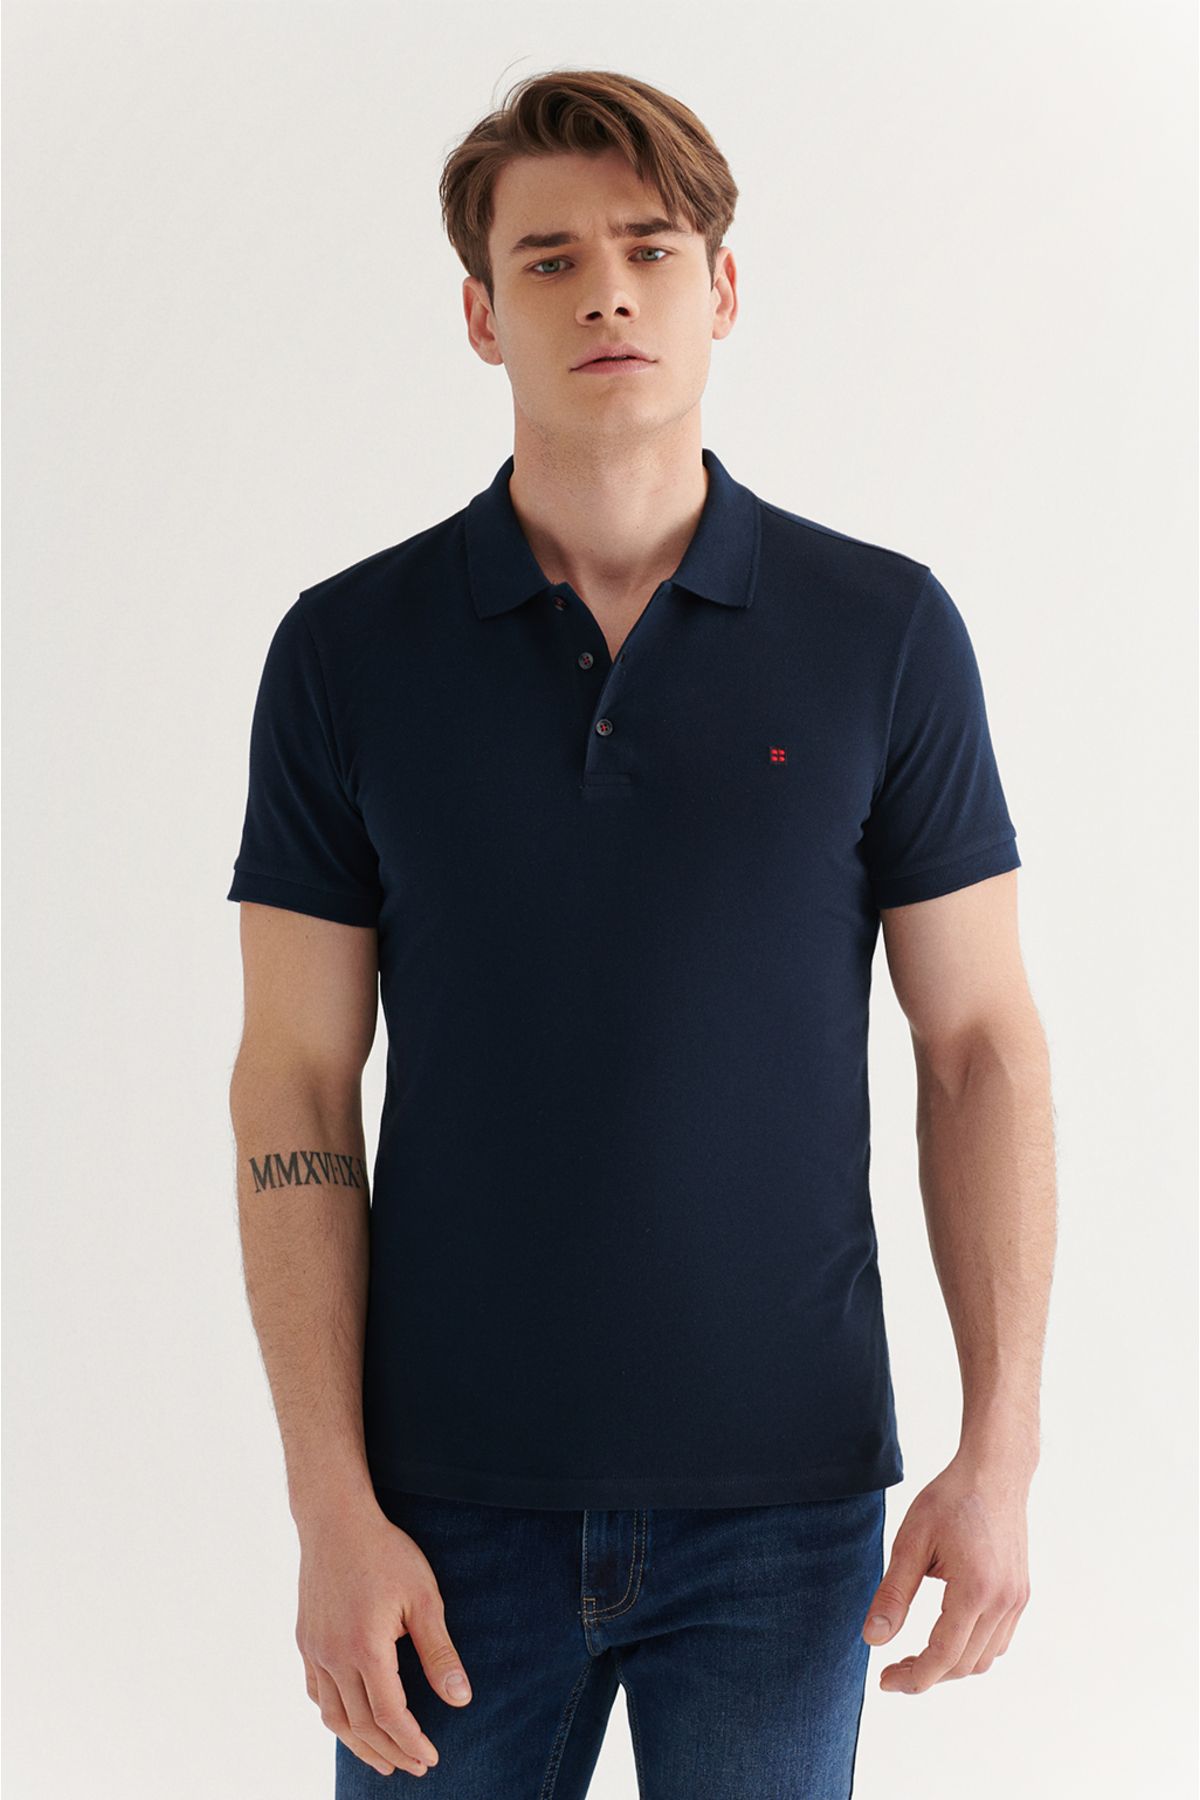 Avva تی شرت یقه پولو مردانه 100% پنبه ای آبی با تناسب استاندارد برش معمولی دار E001004